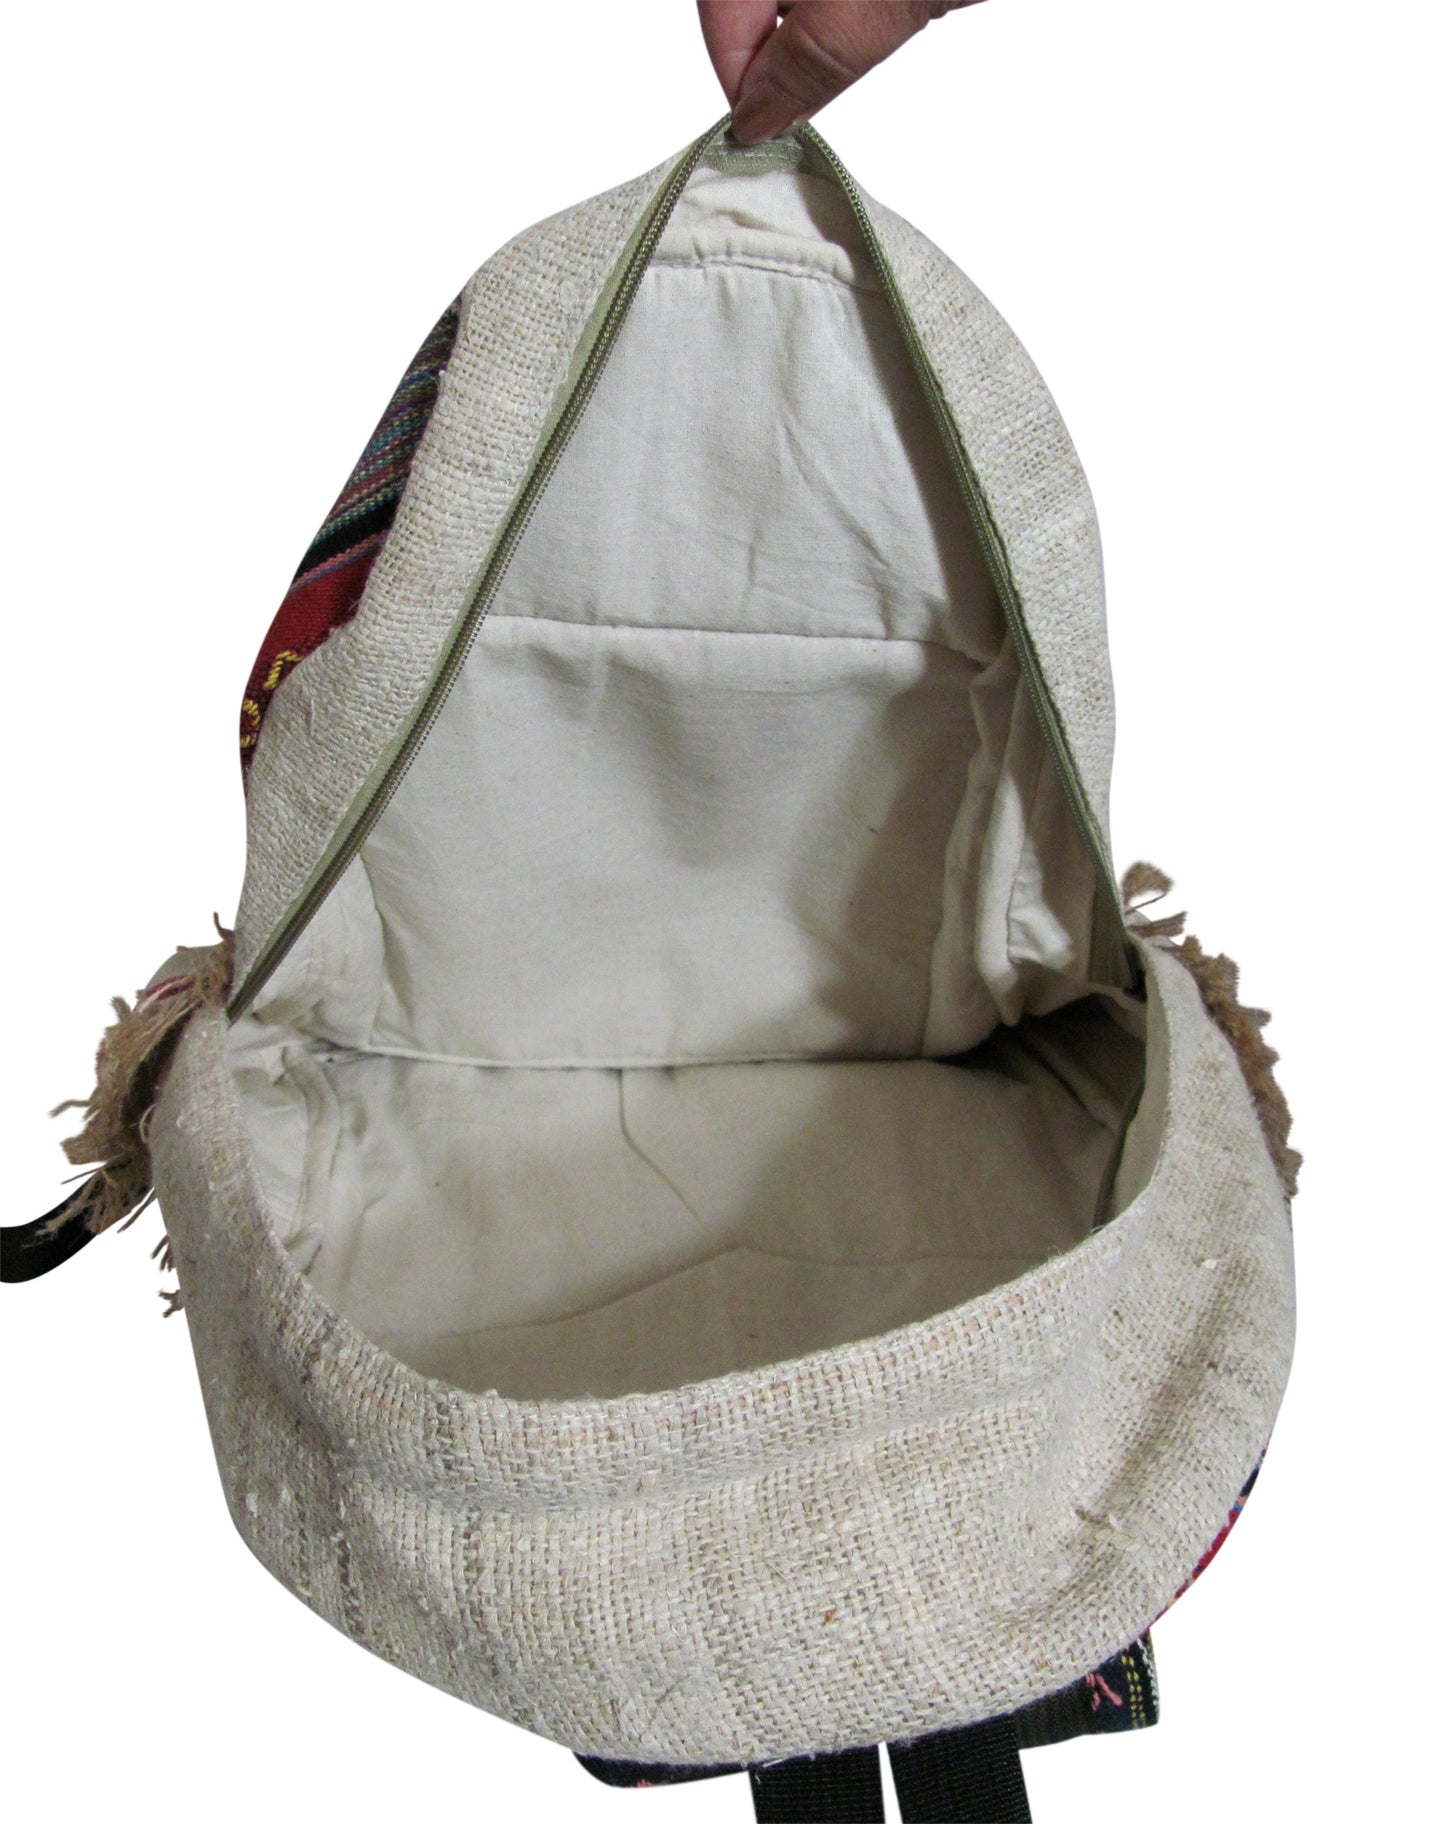 Heavy Duty Ethnic Handmade Large Multipocket Himalayan Hemp Backpack #2 - Ambali Fashion Backpacks accessory, bohemian, bookbag, canvas, classic, eastern, ethnic, fashion, gift, new age, retr